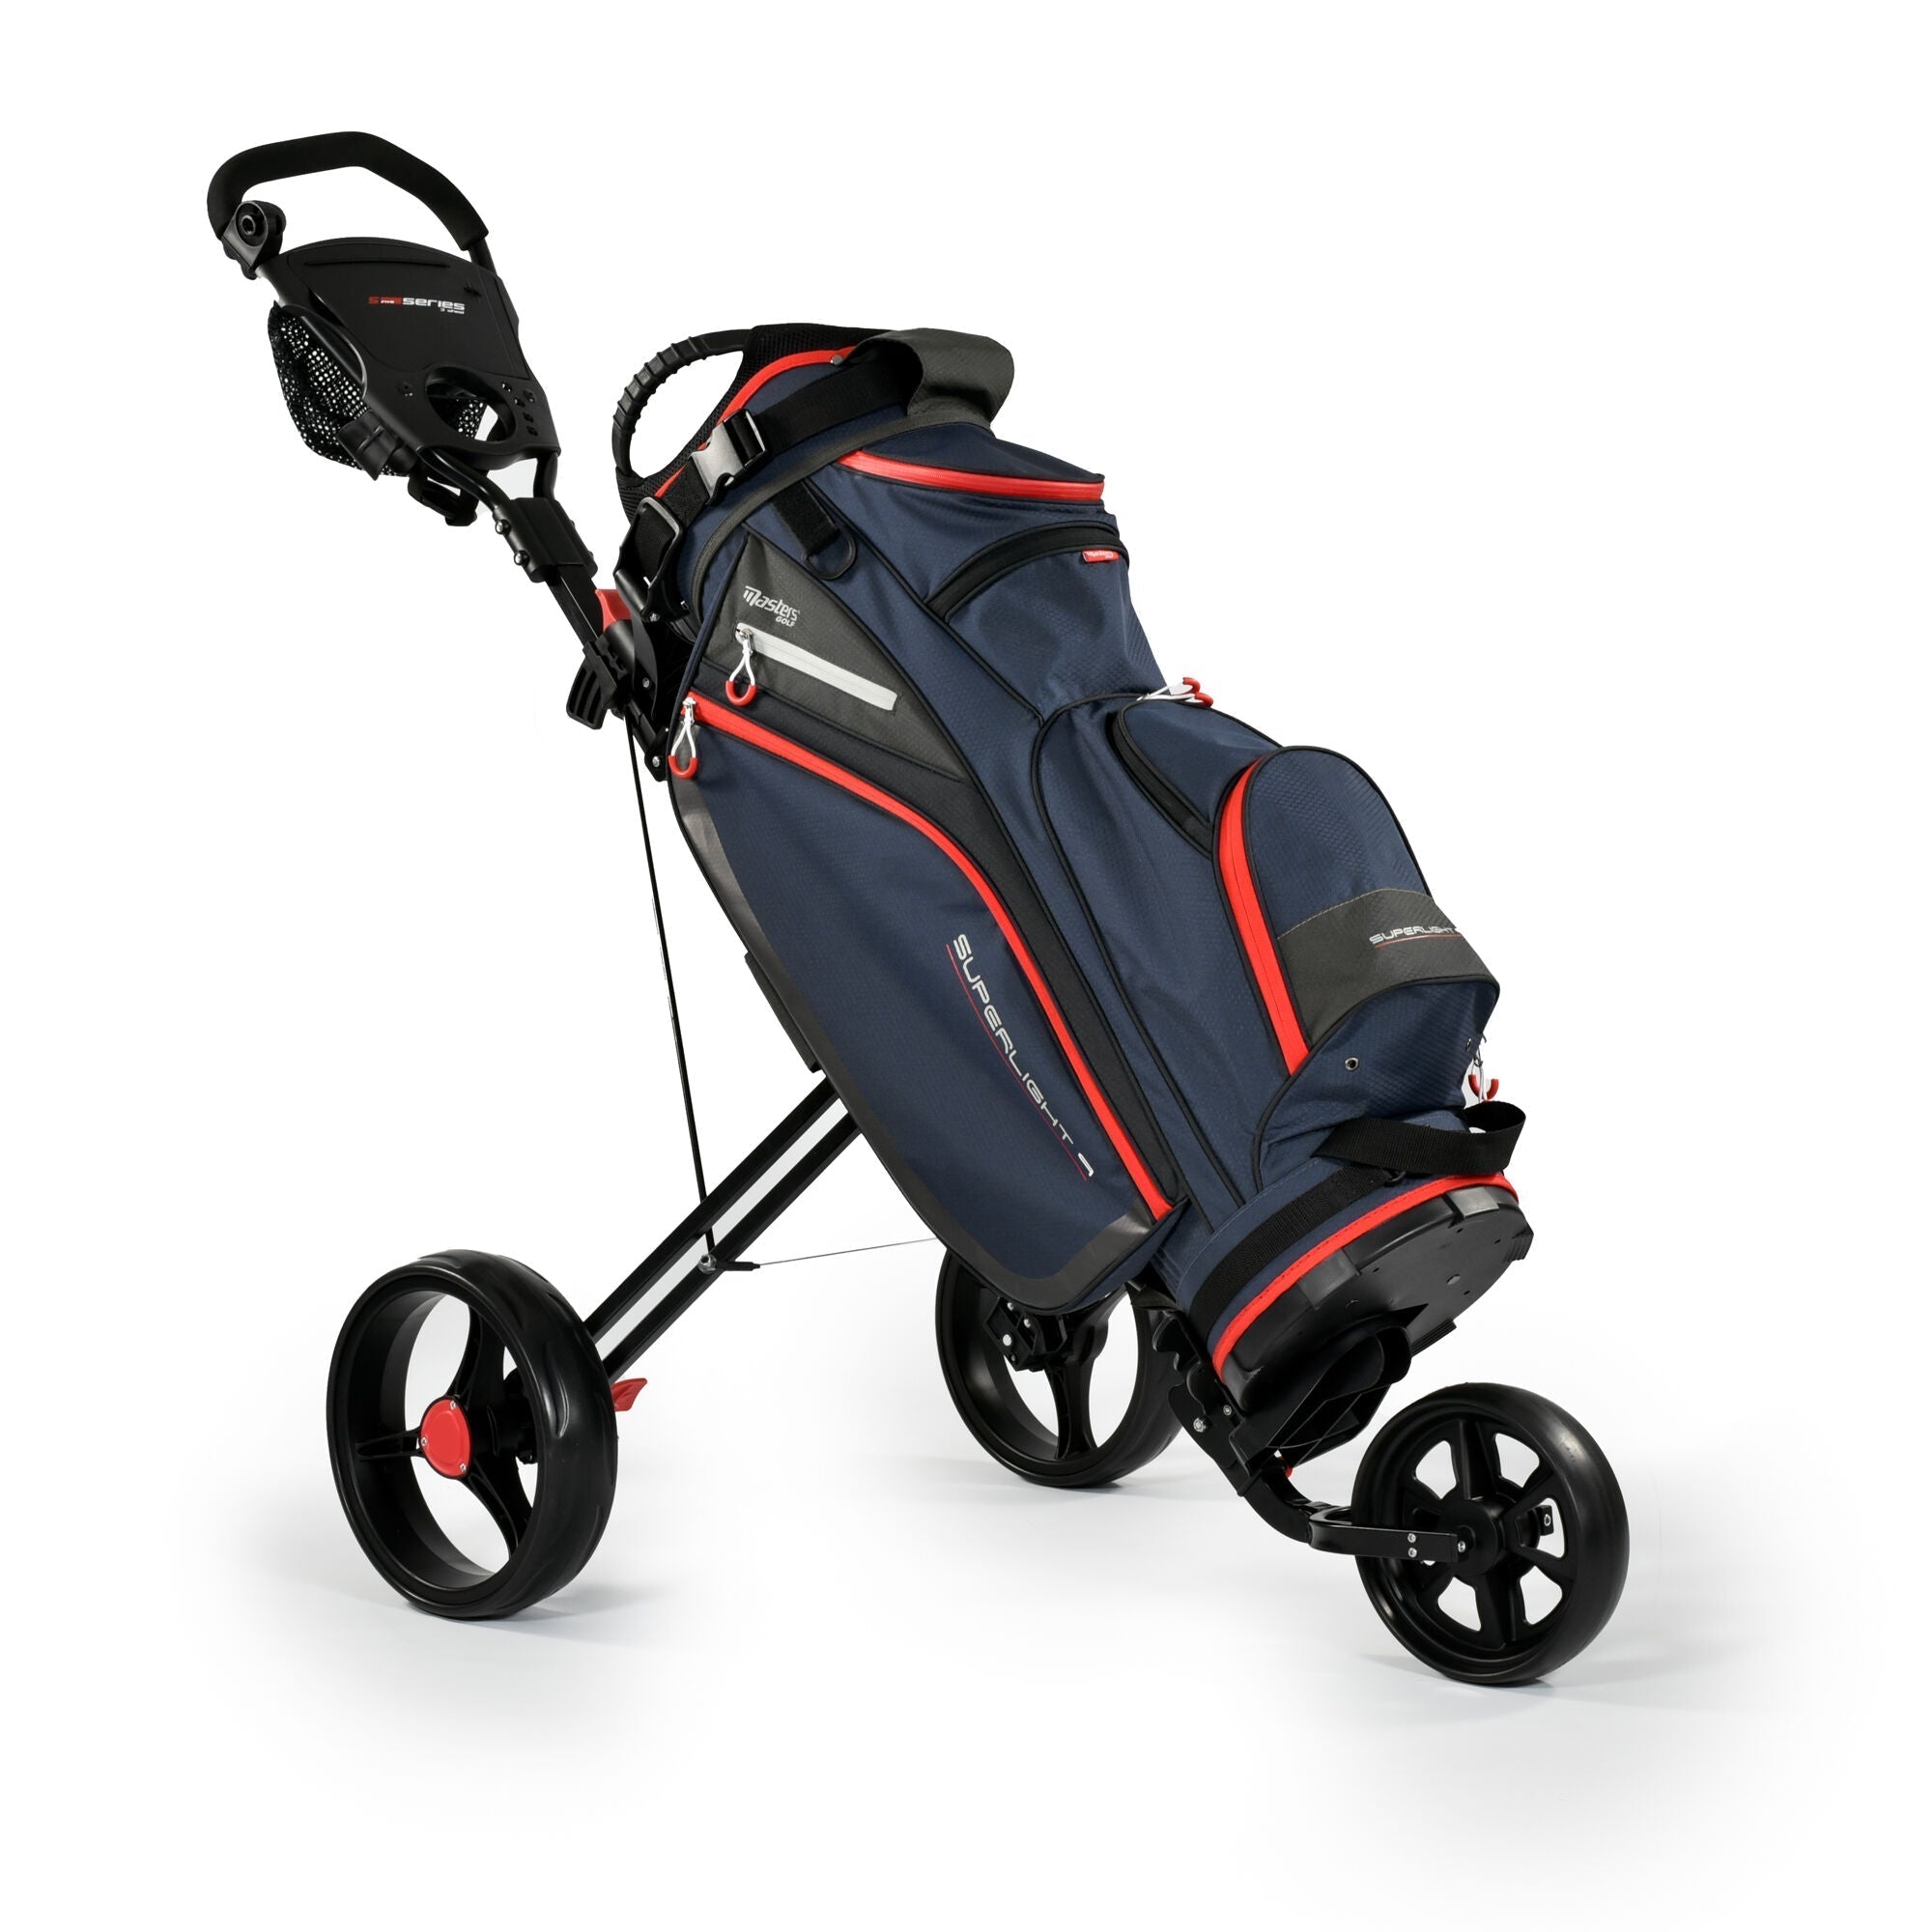 Masters Superlight 9 Cart Bag | Evolution Golf | Masters Golf | Evolution Golf 